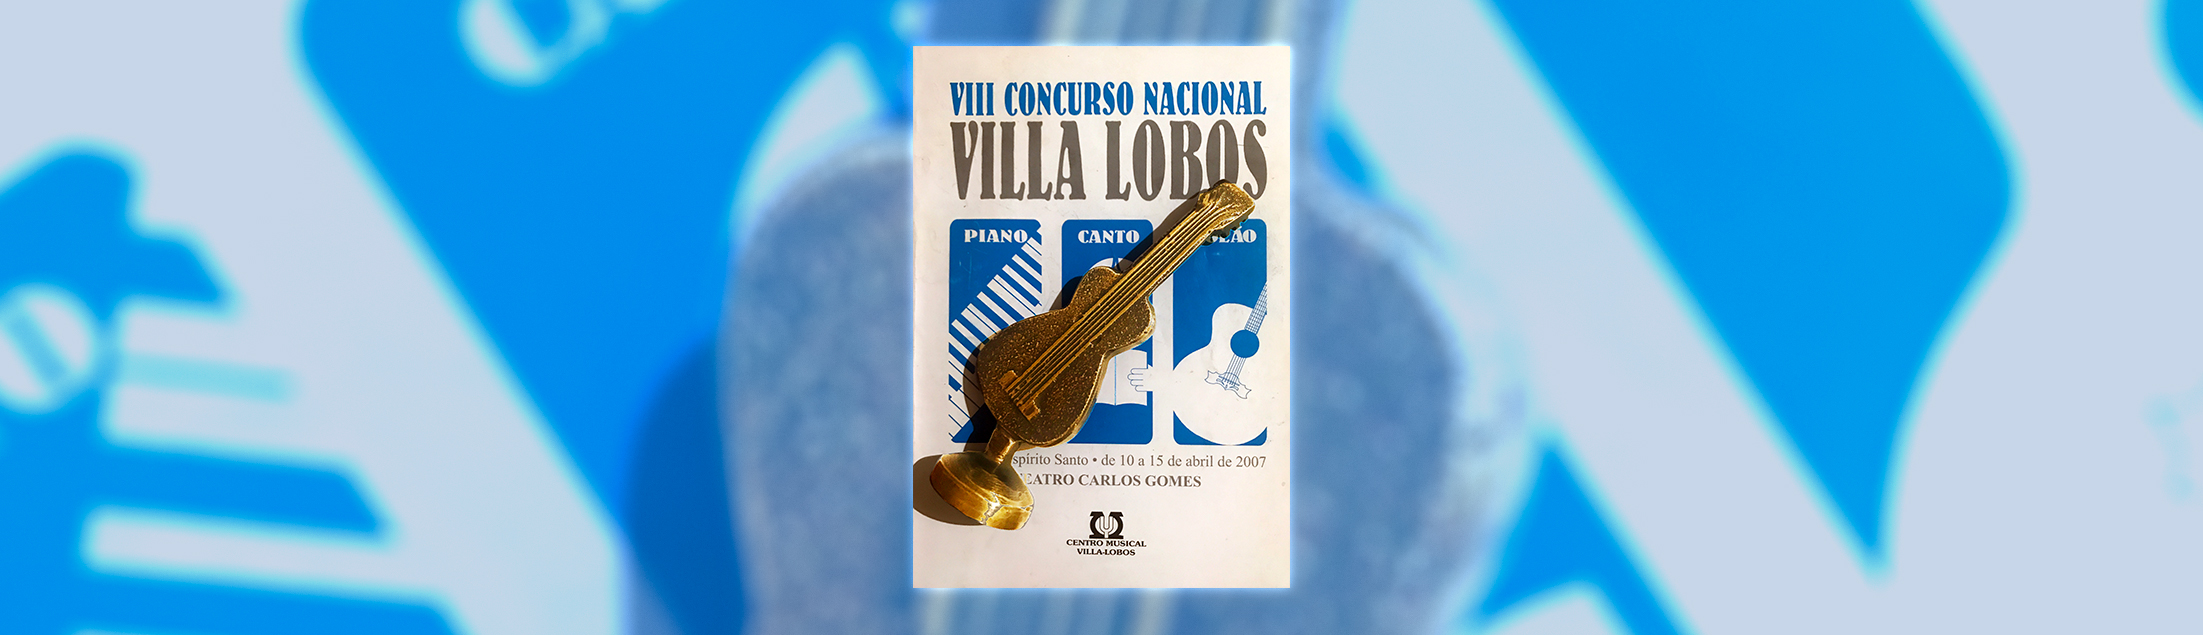 Concurso Villa Lobos de Vitória